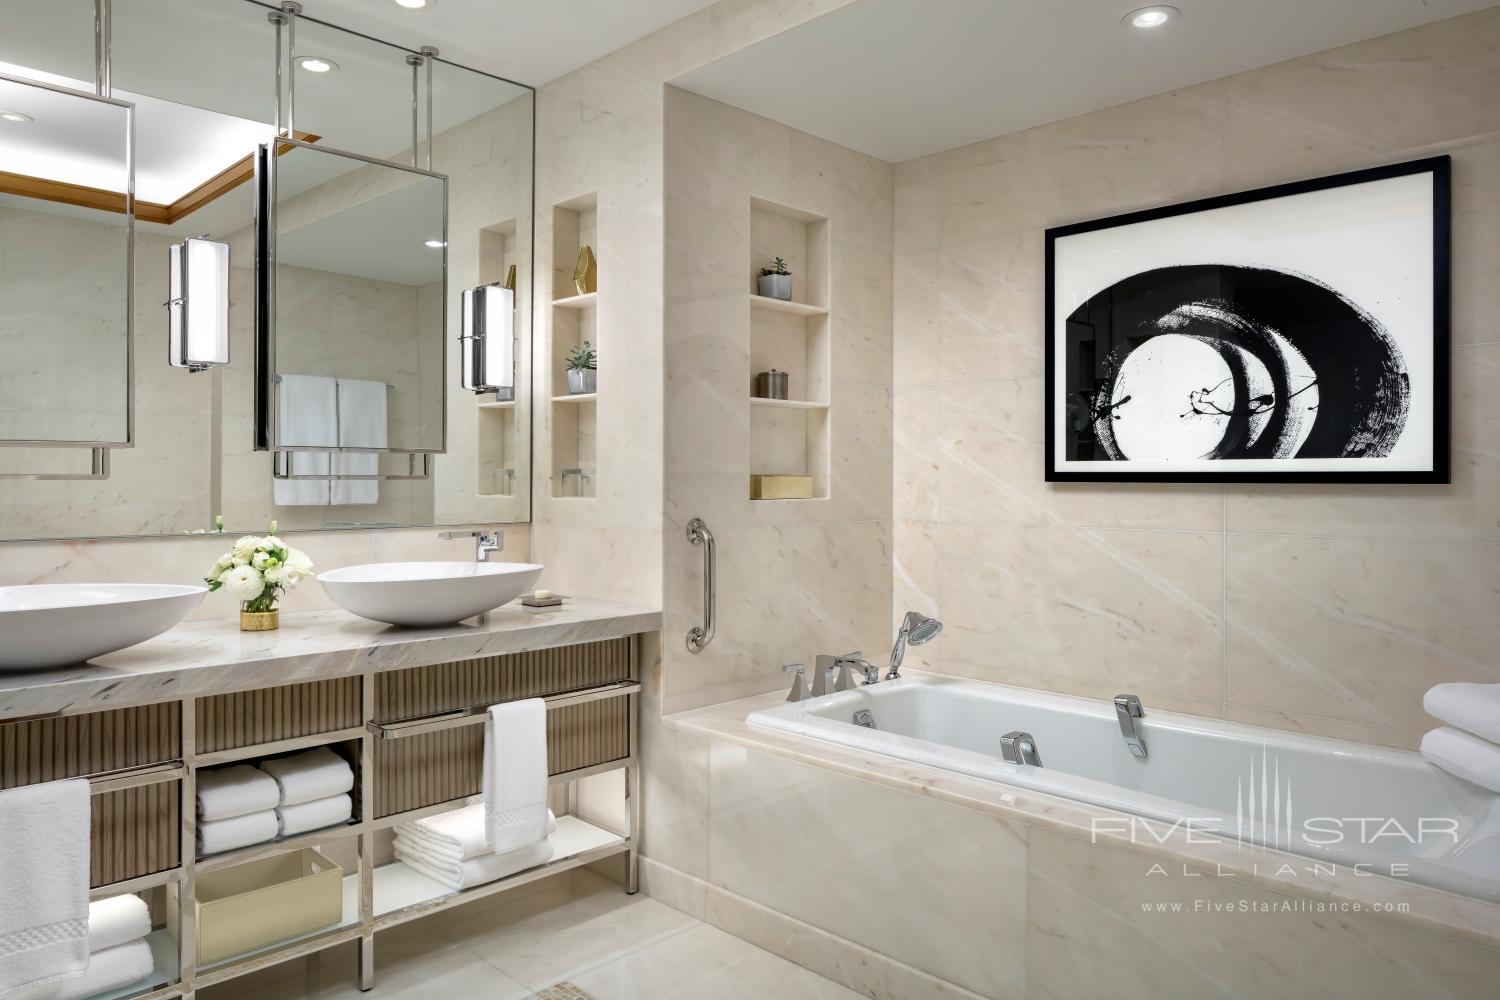 Wellington Suite Bathroom at The Ritz-Carlton, Toronto